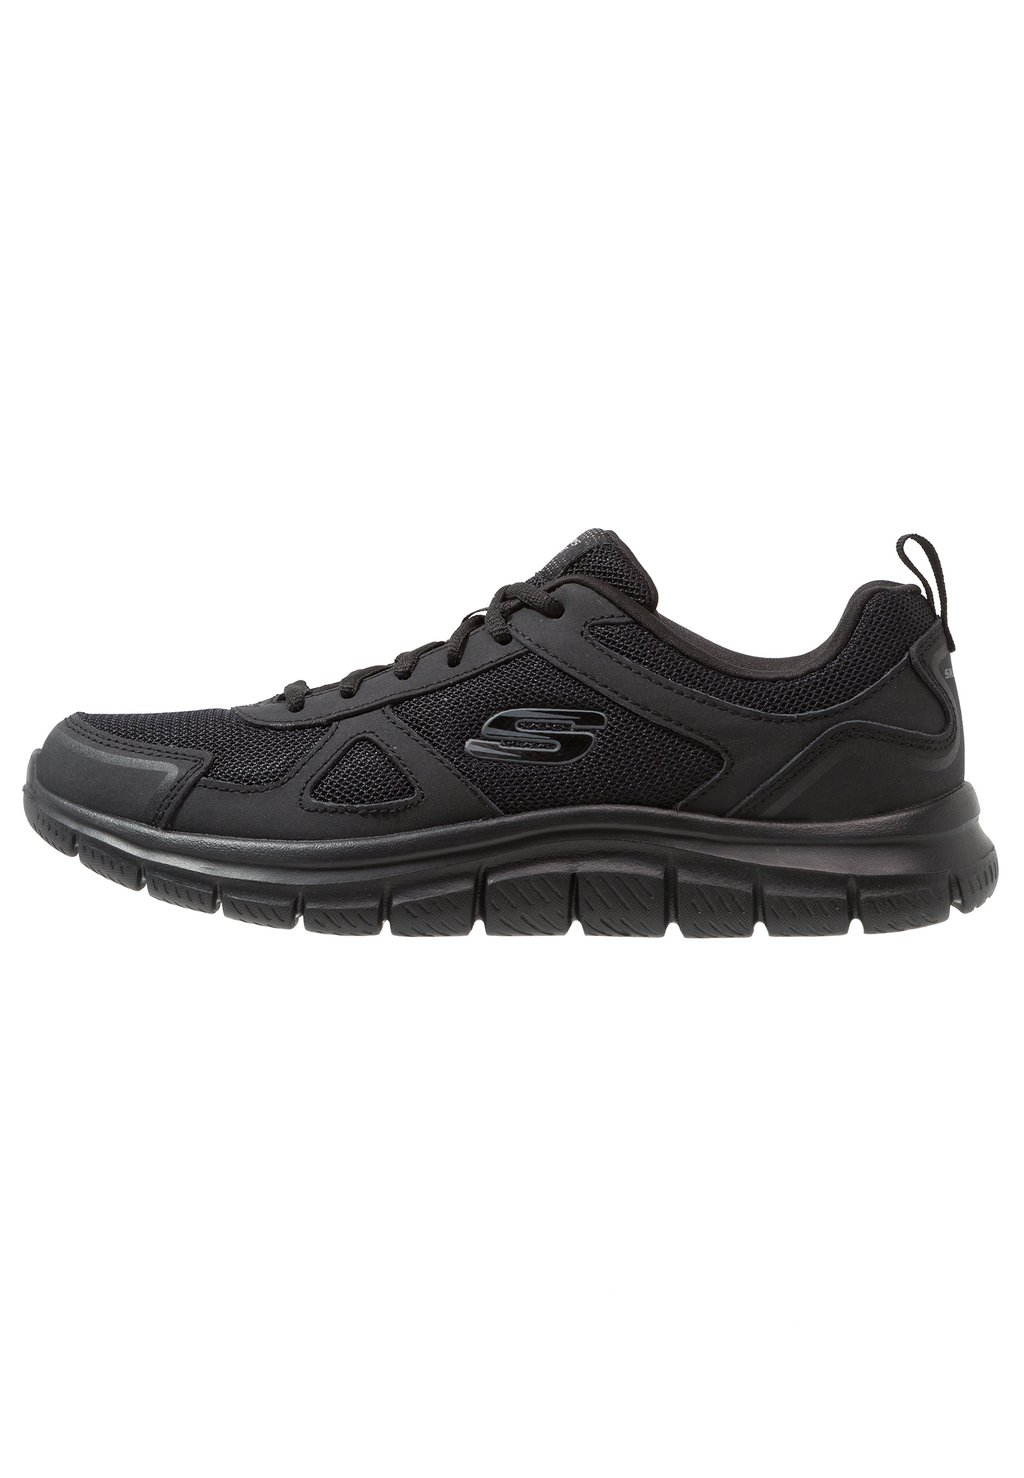 Низкие кроссовки Track Scloric Skechers Wide Fit, черный кроссовки низкие track skechers wide fit цвет charcoal black